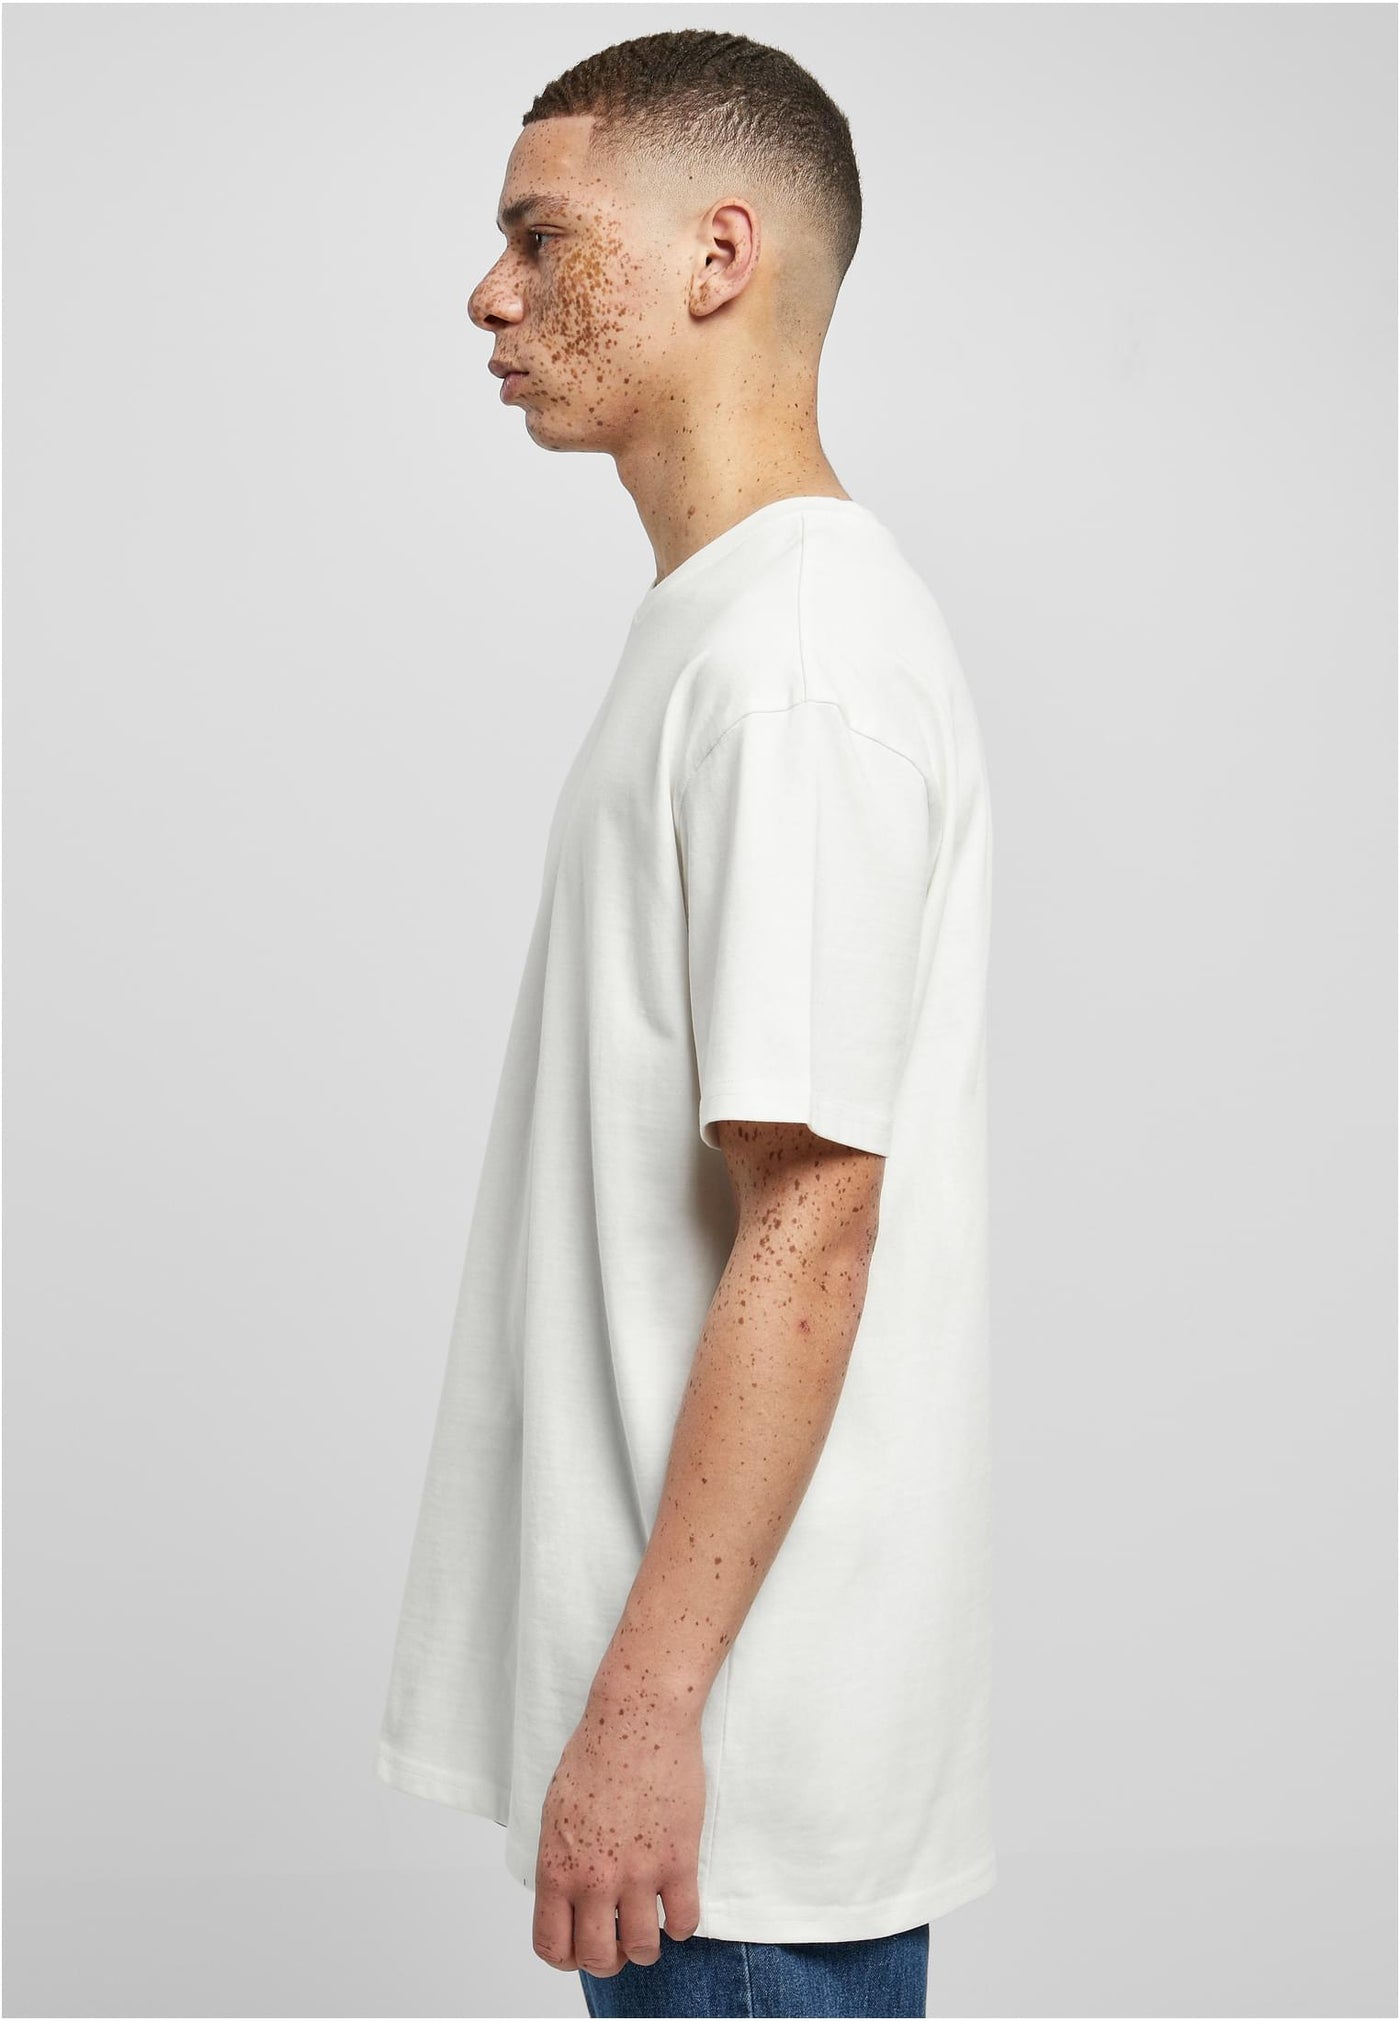 YO-C BY 102 Heavy Oversized Blank T-Shirt - Blanc White